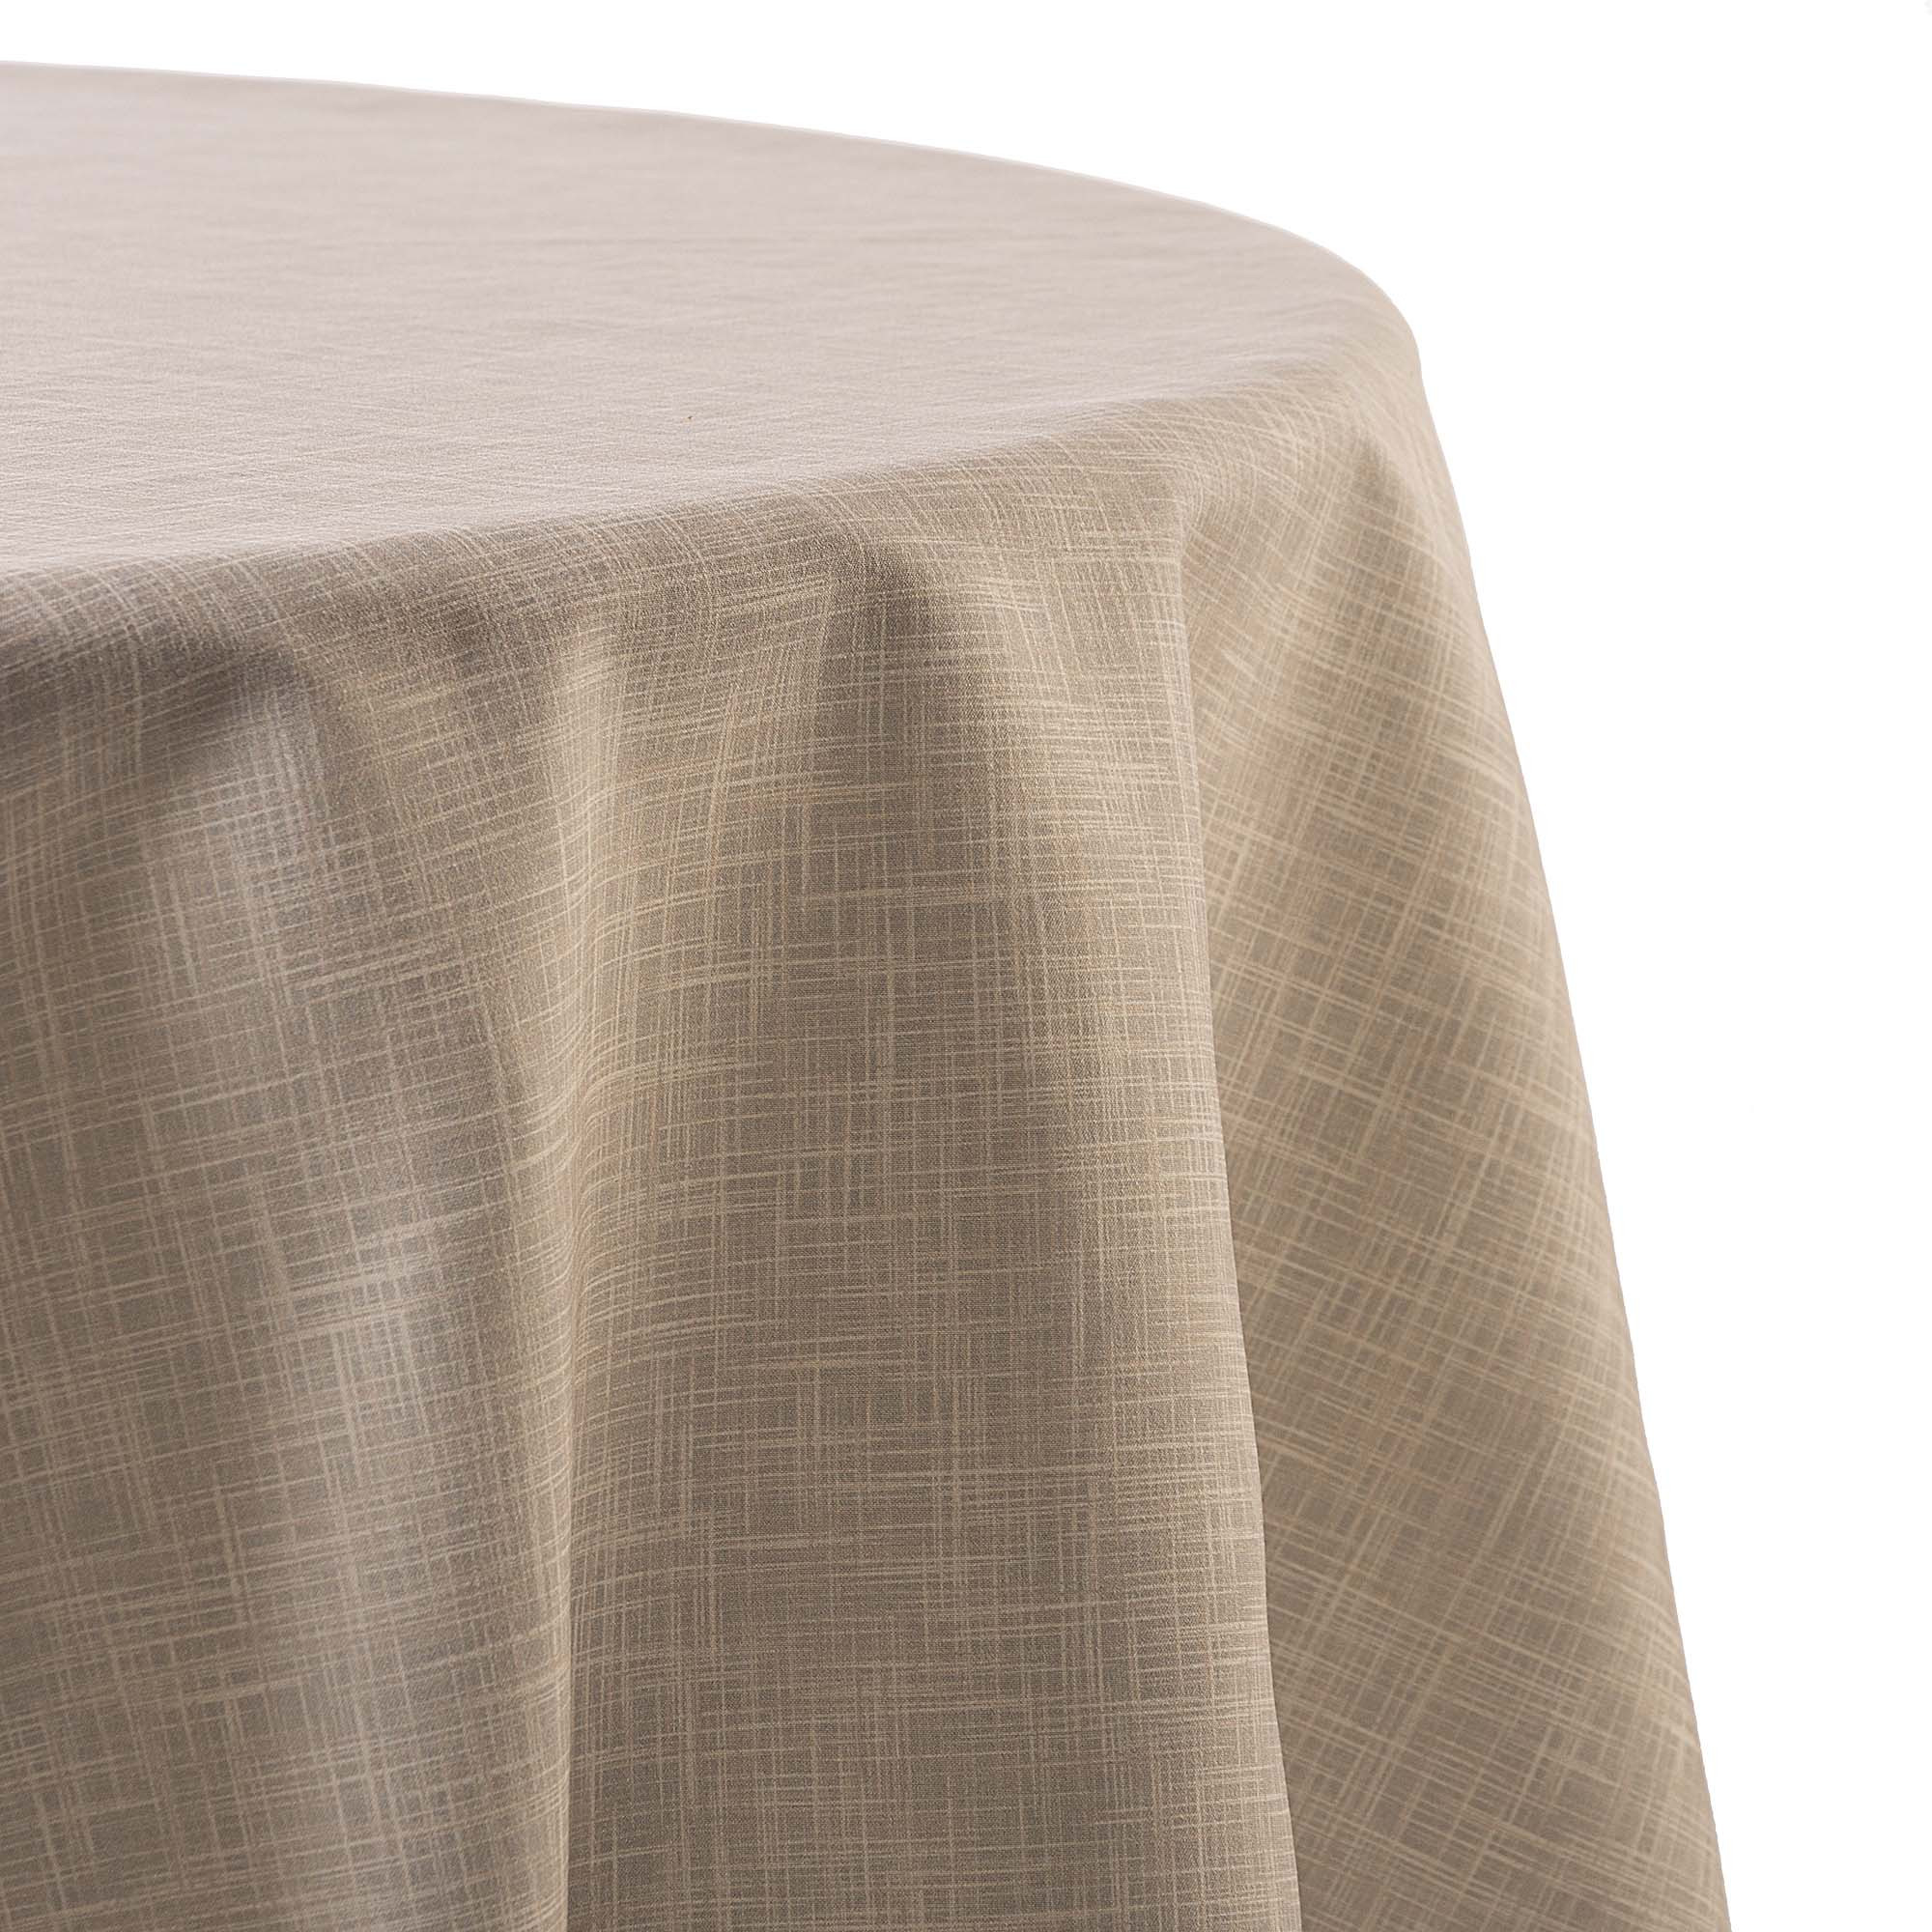 Mantel antimanchas de tela por metros impermeable teflon - Colibri crema  46044-1